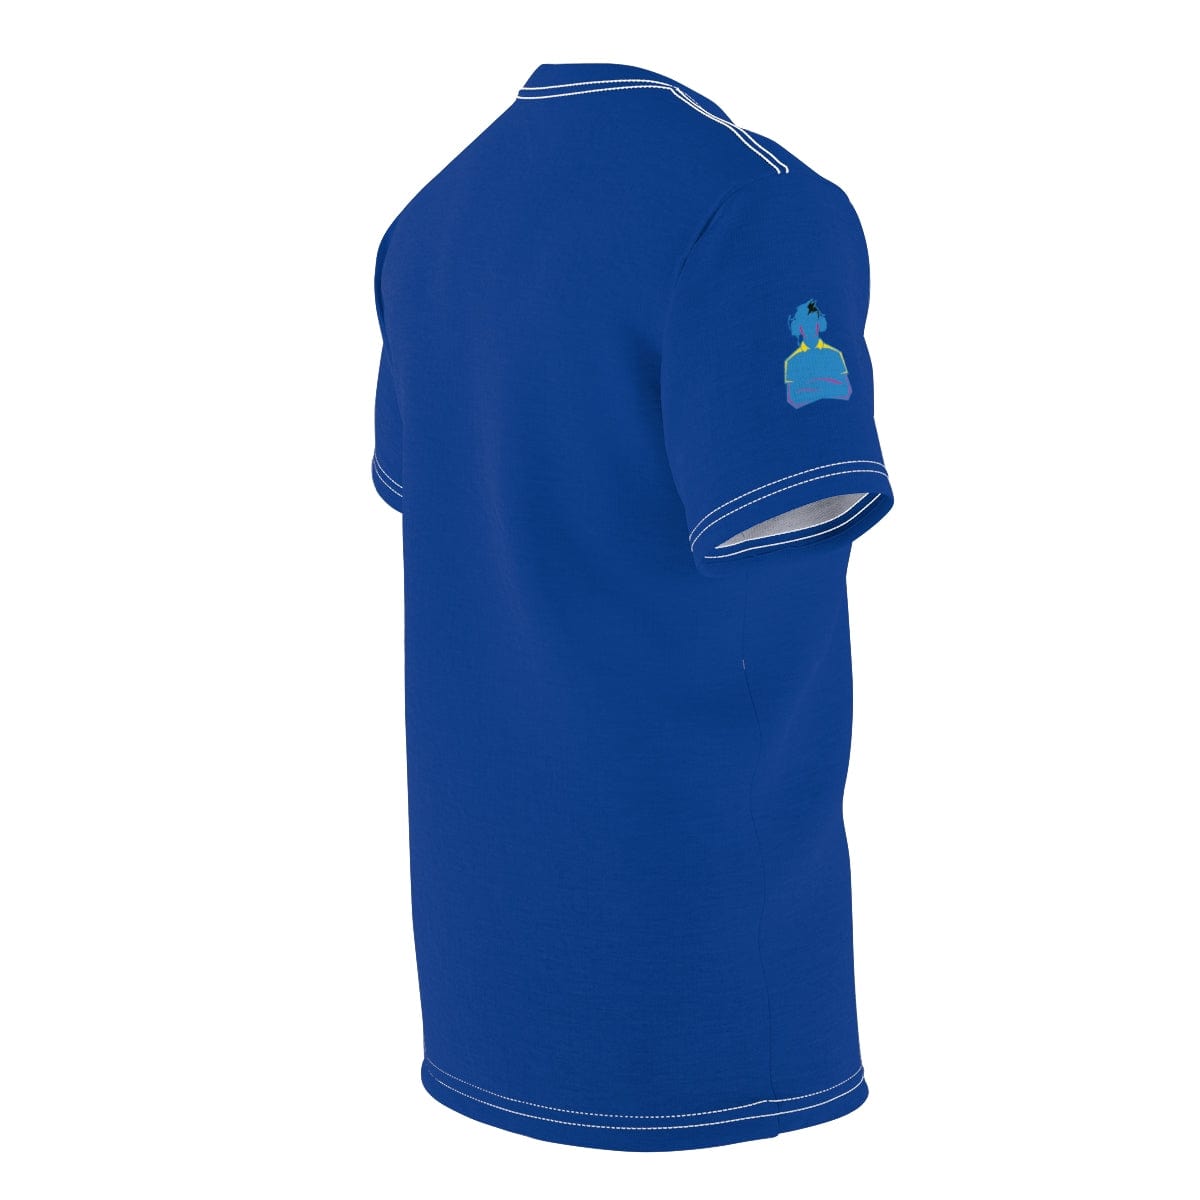 The All Premium Heart Energy Bar Royal Blue Unisex Cut & Sew T -Shirt